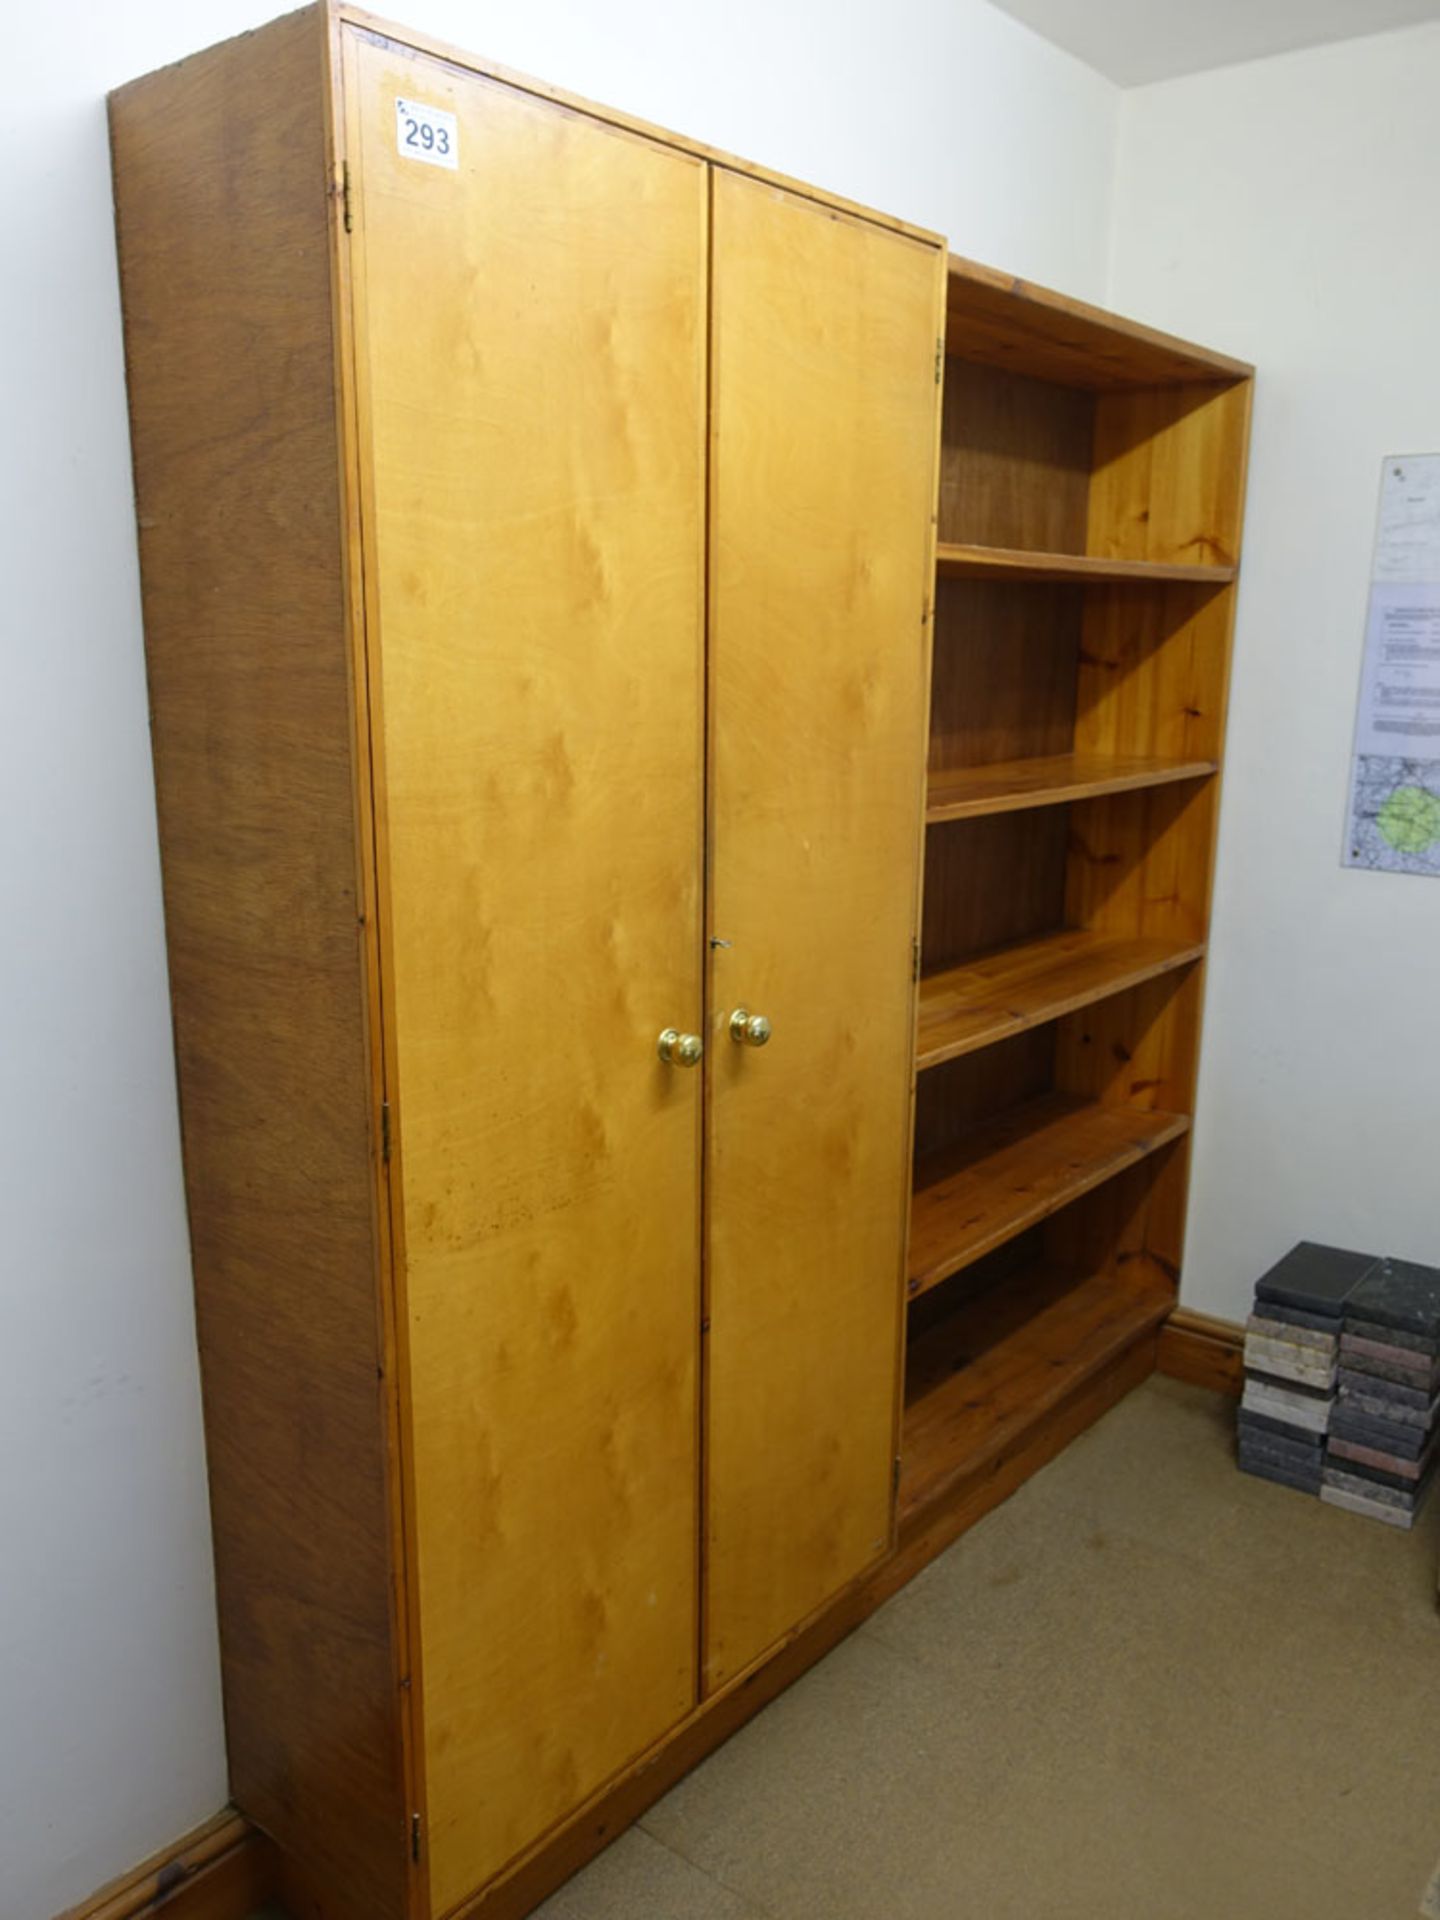 Pine open shelf unit and a similar double door cupboard